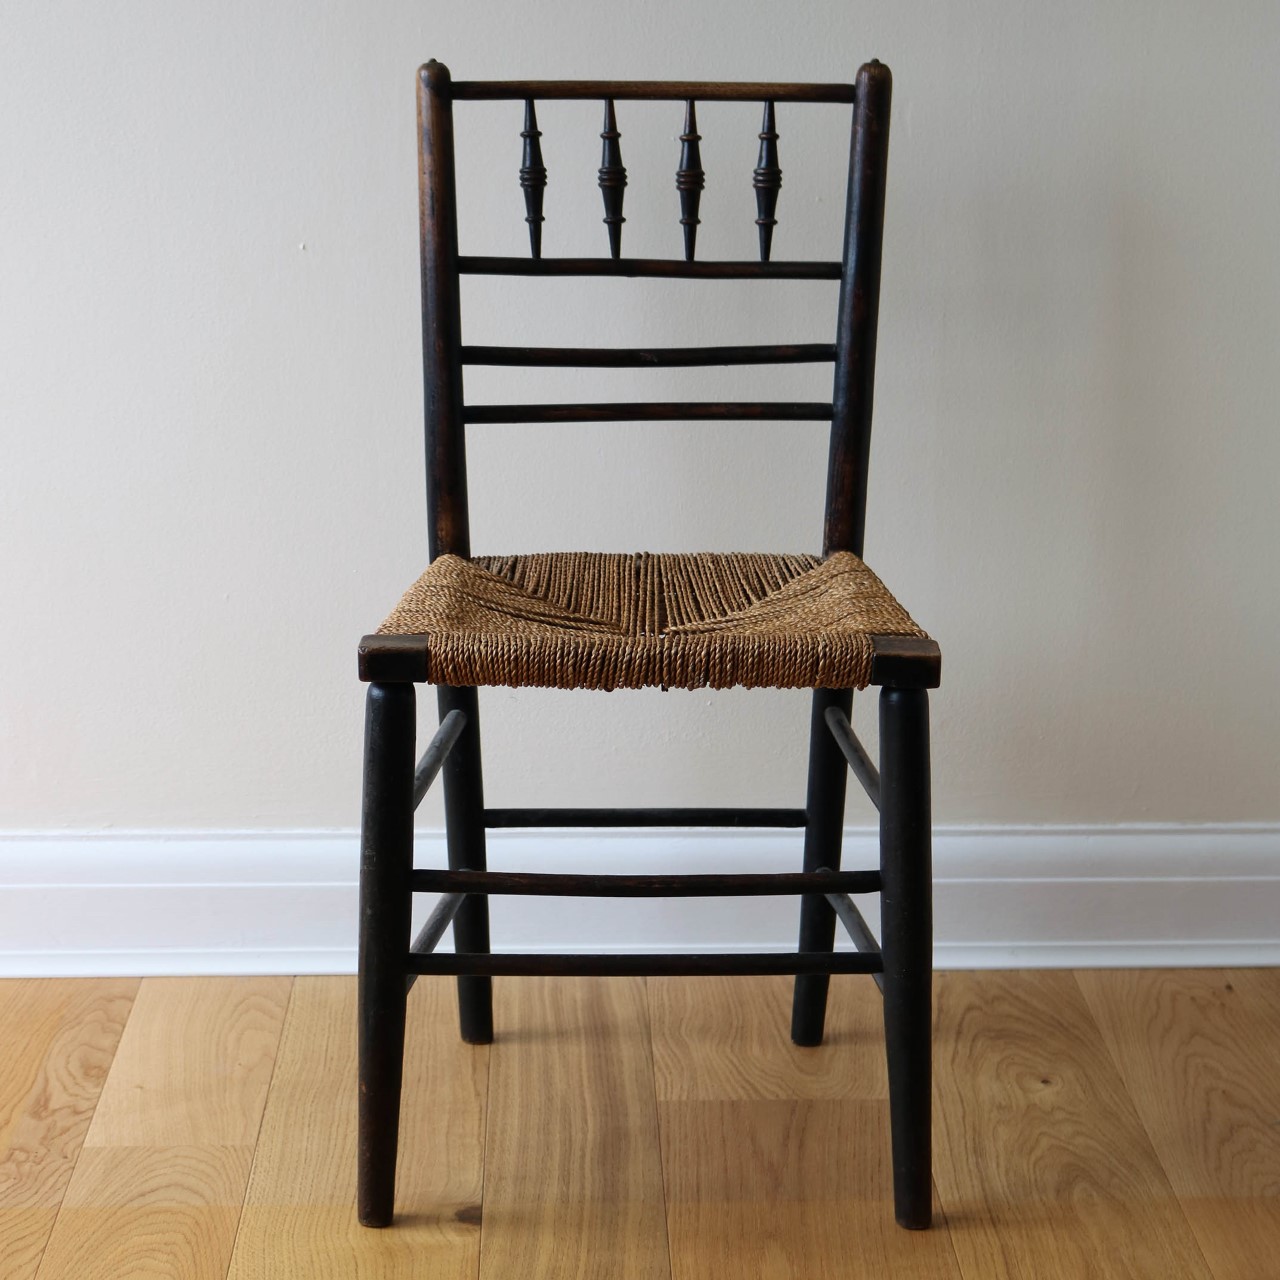 A William Morris Sussex chair